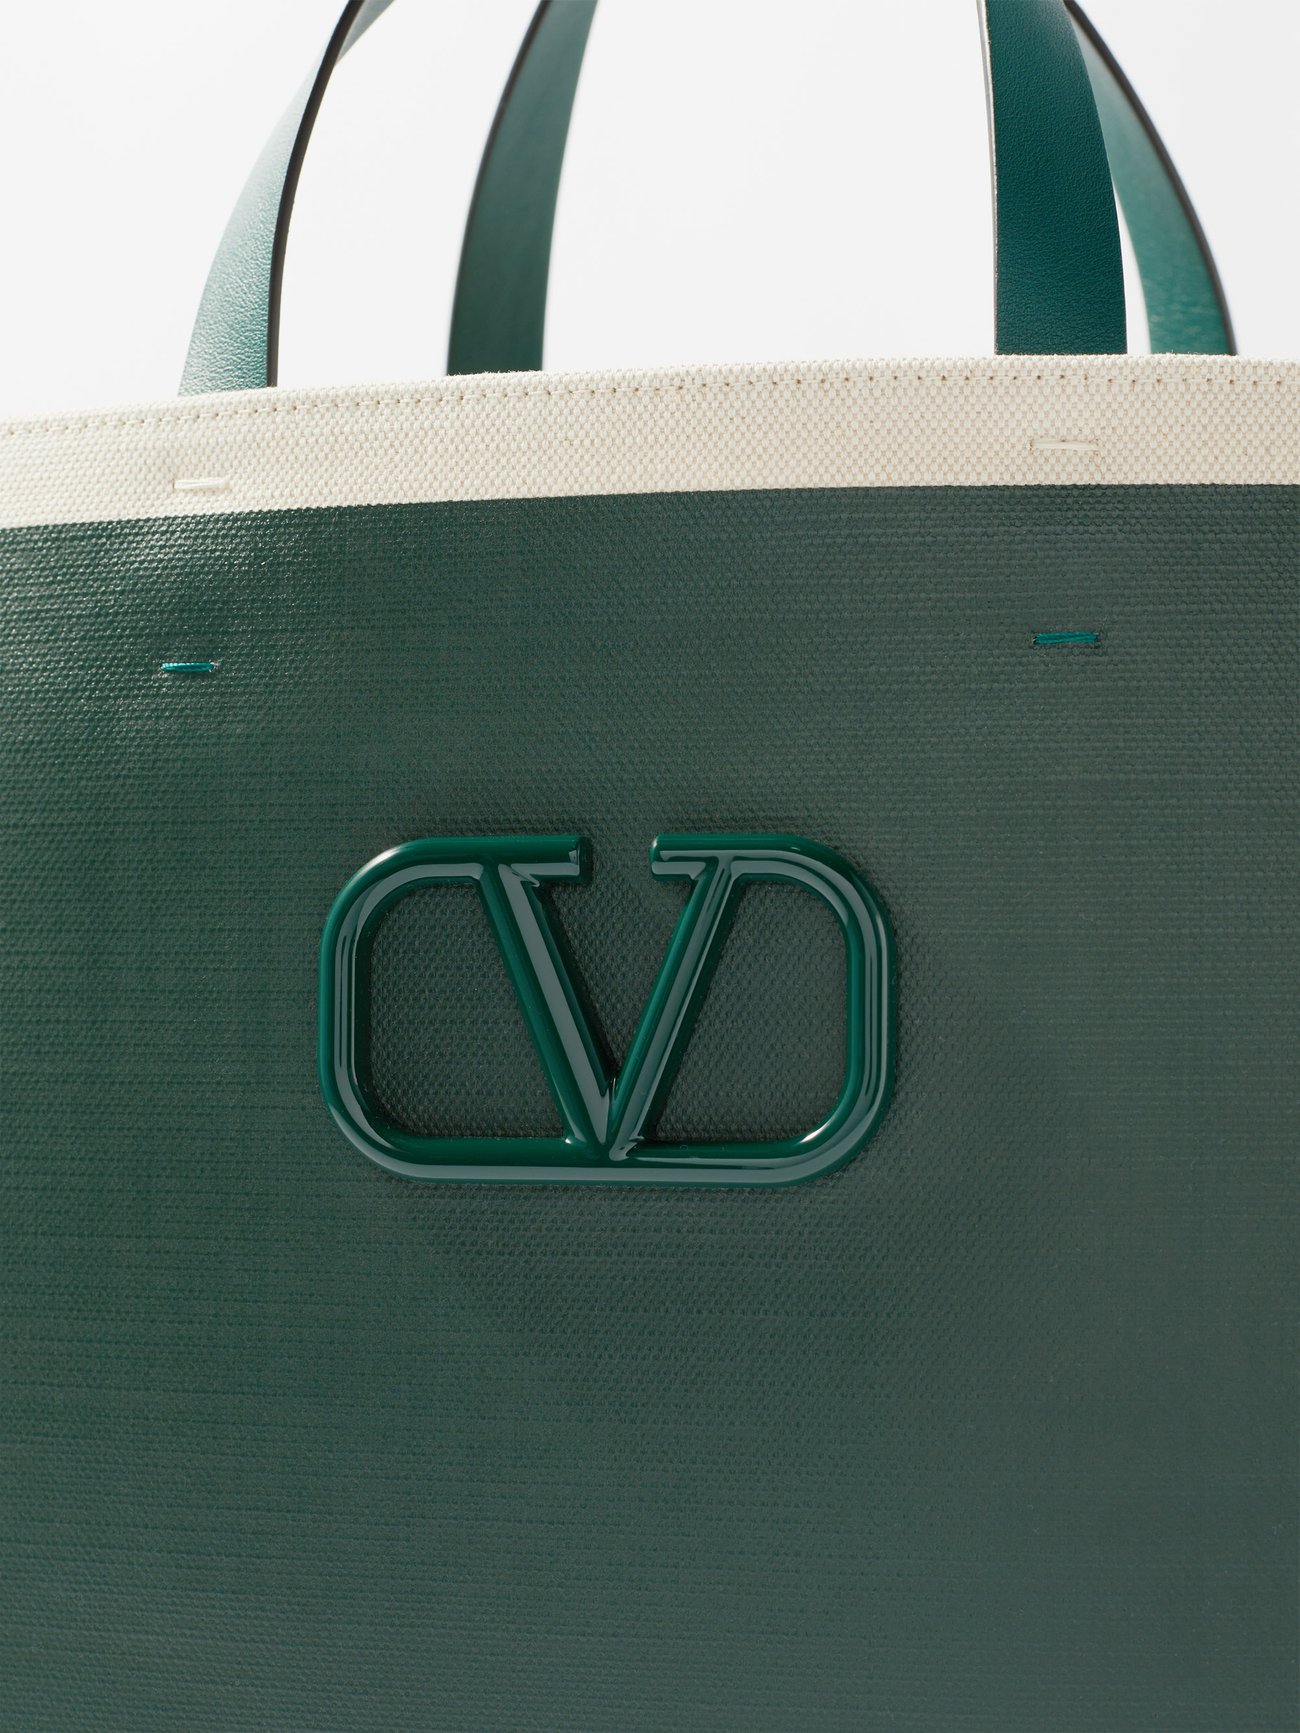 Valentino Print V-Logo Tote Bag